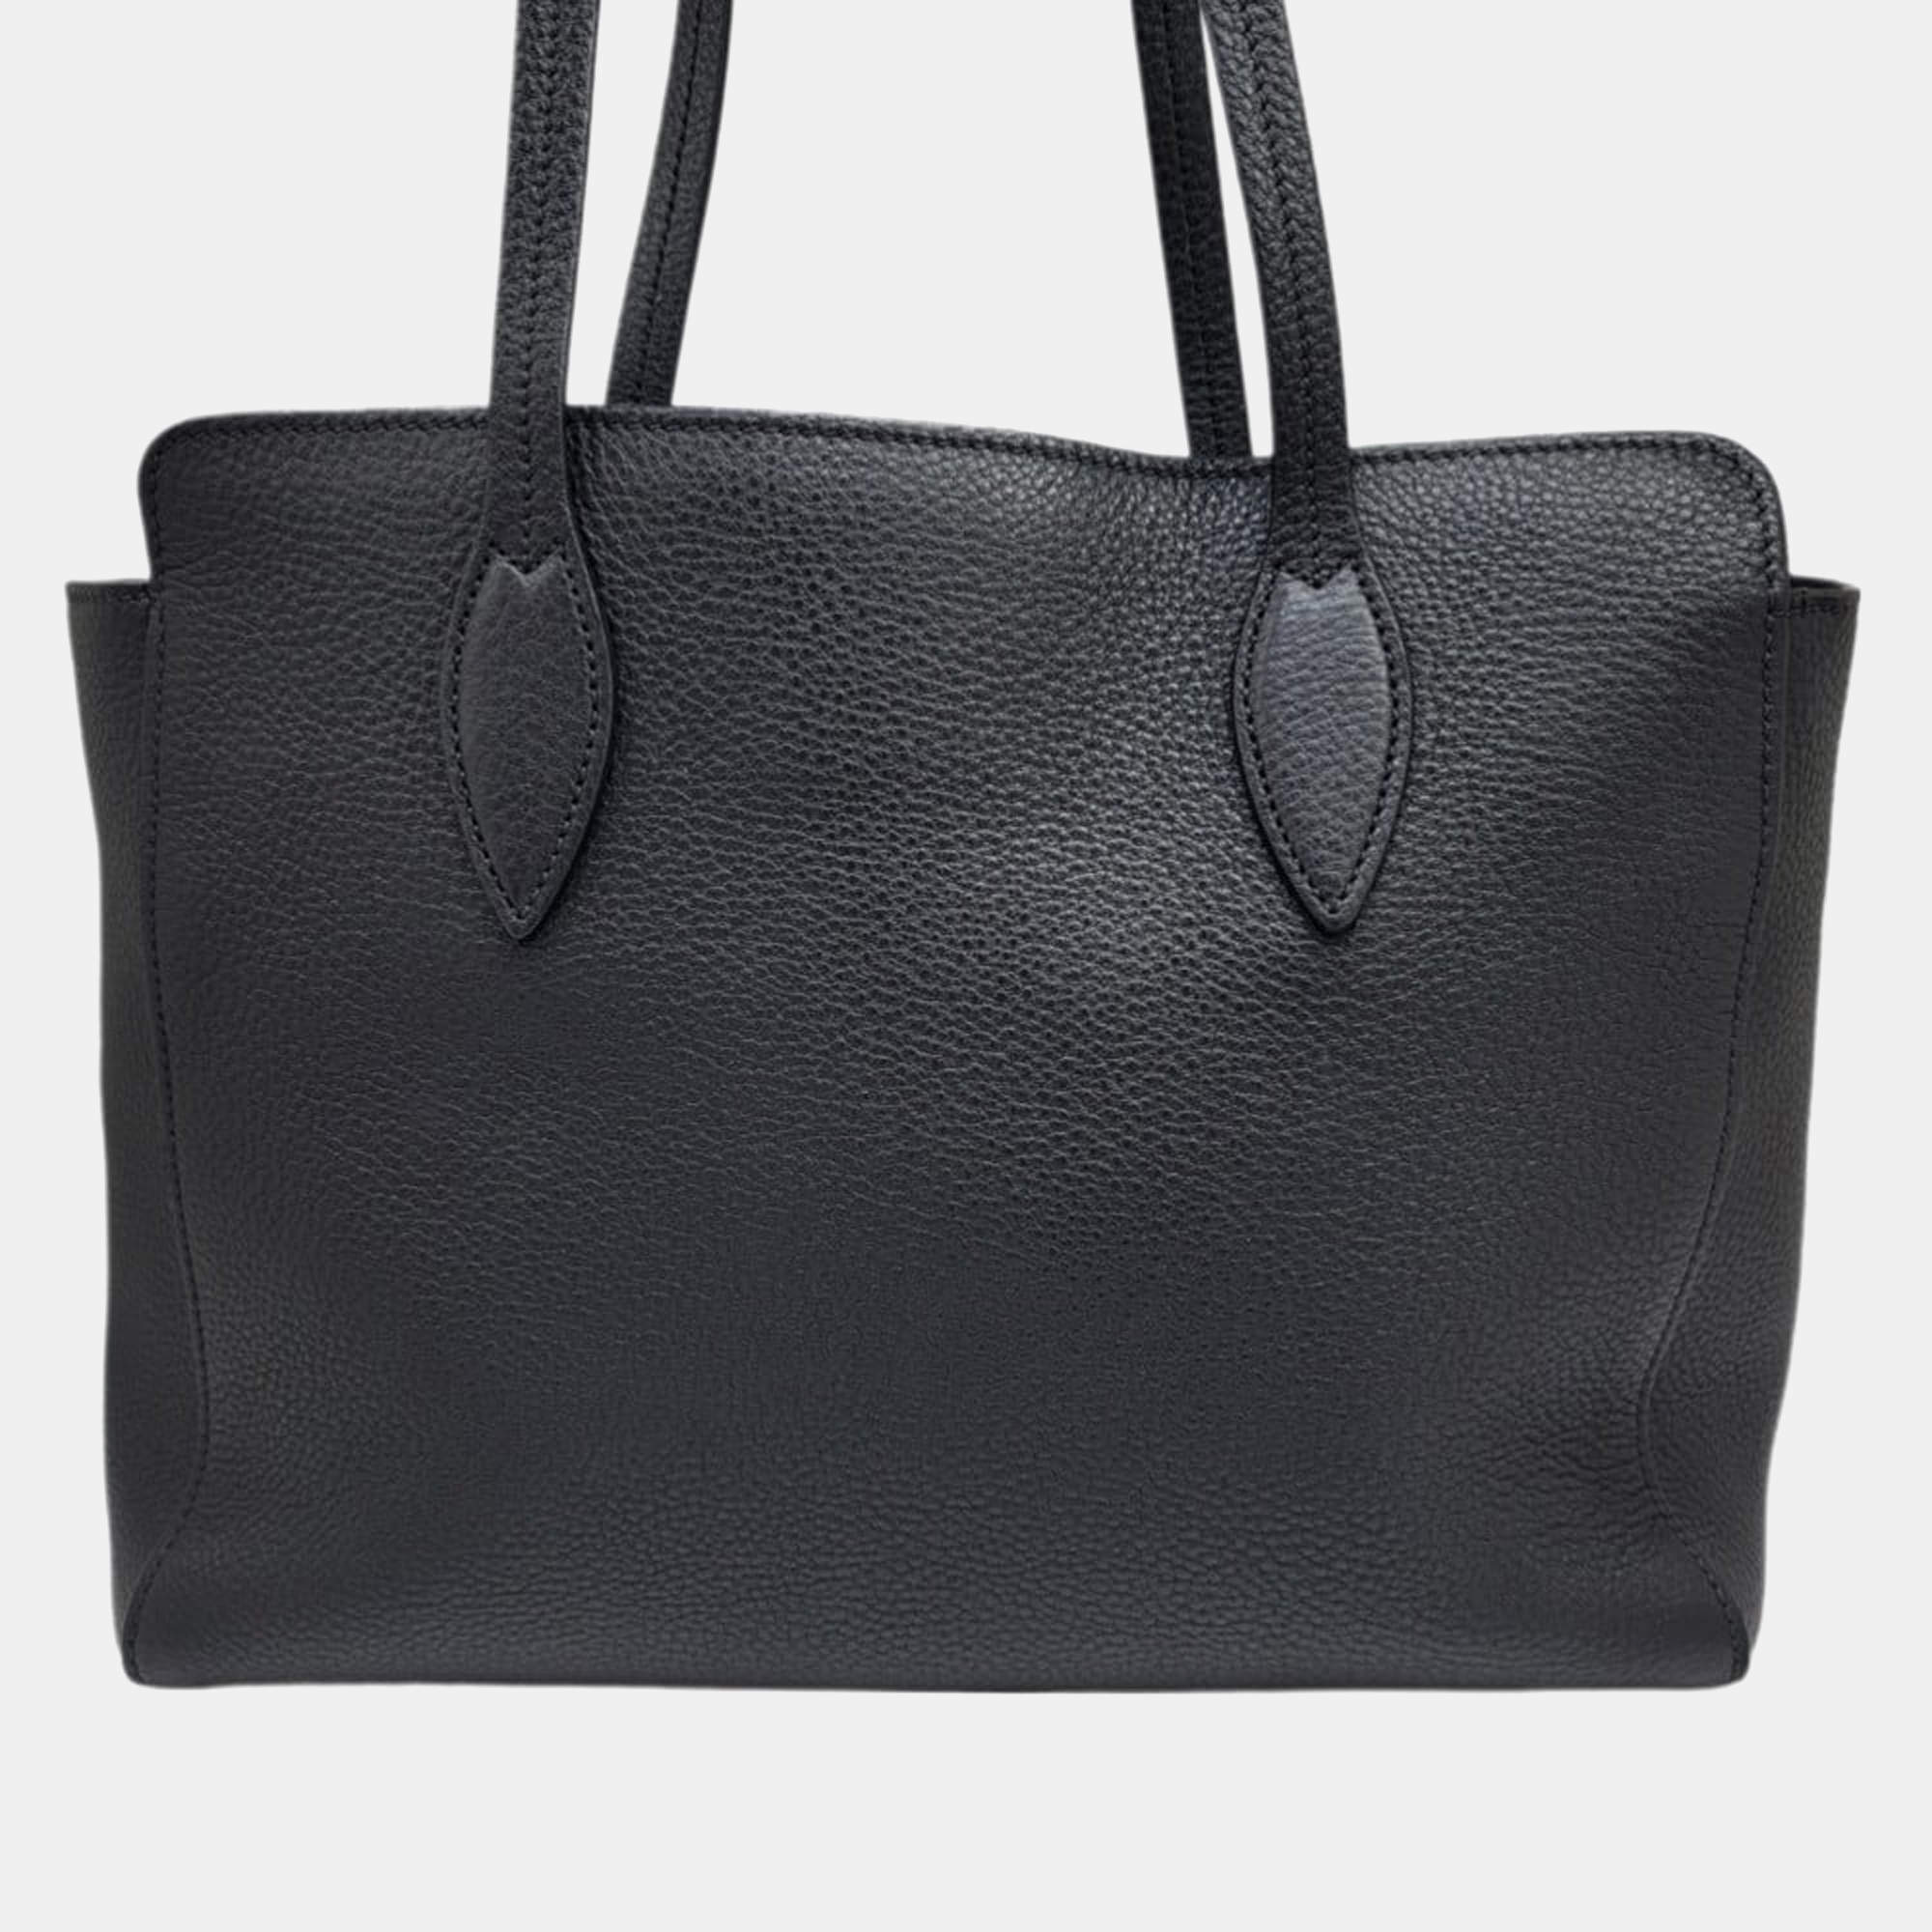 What's In My Bag - Prada Black Vitello Phenix Leather Handbag! 